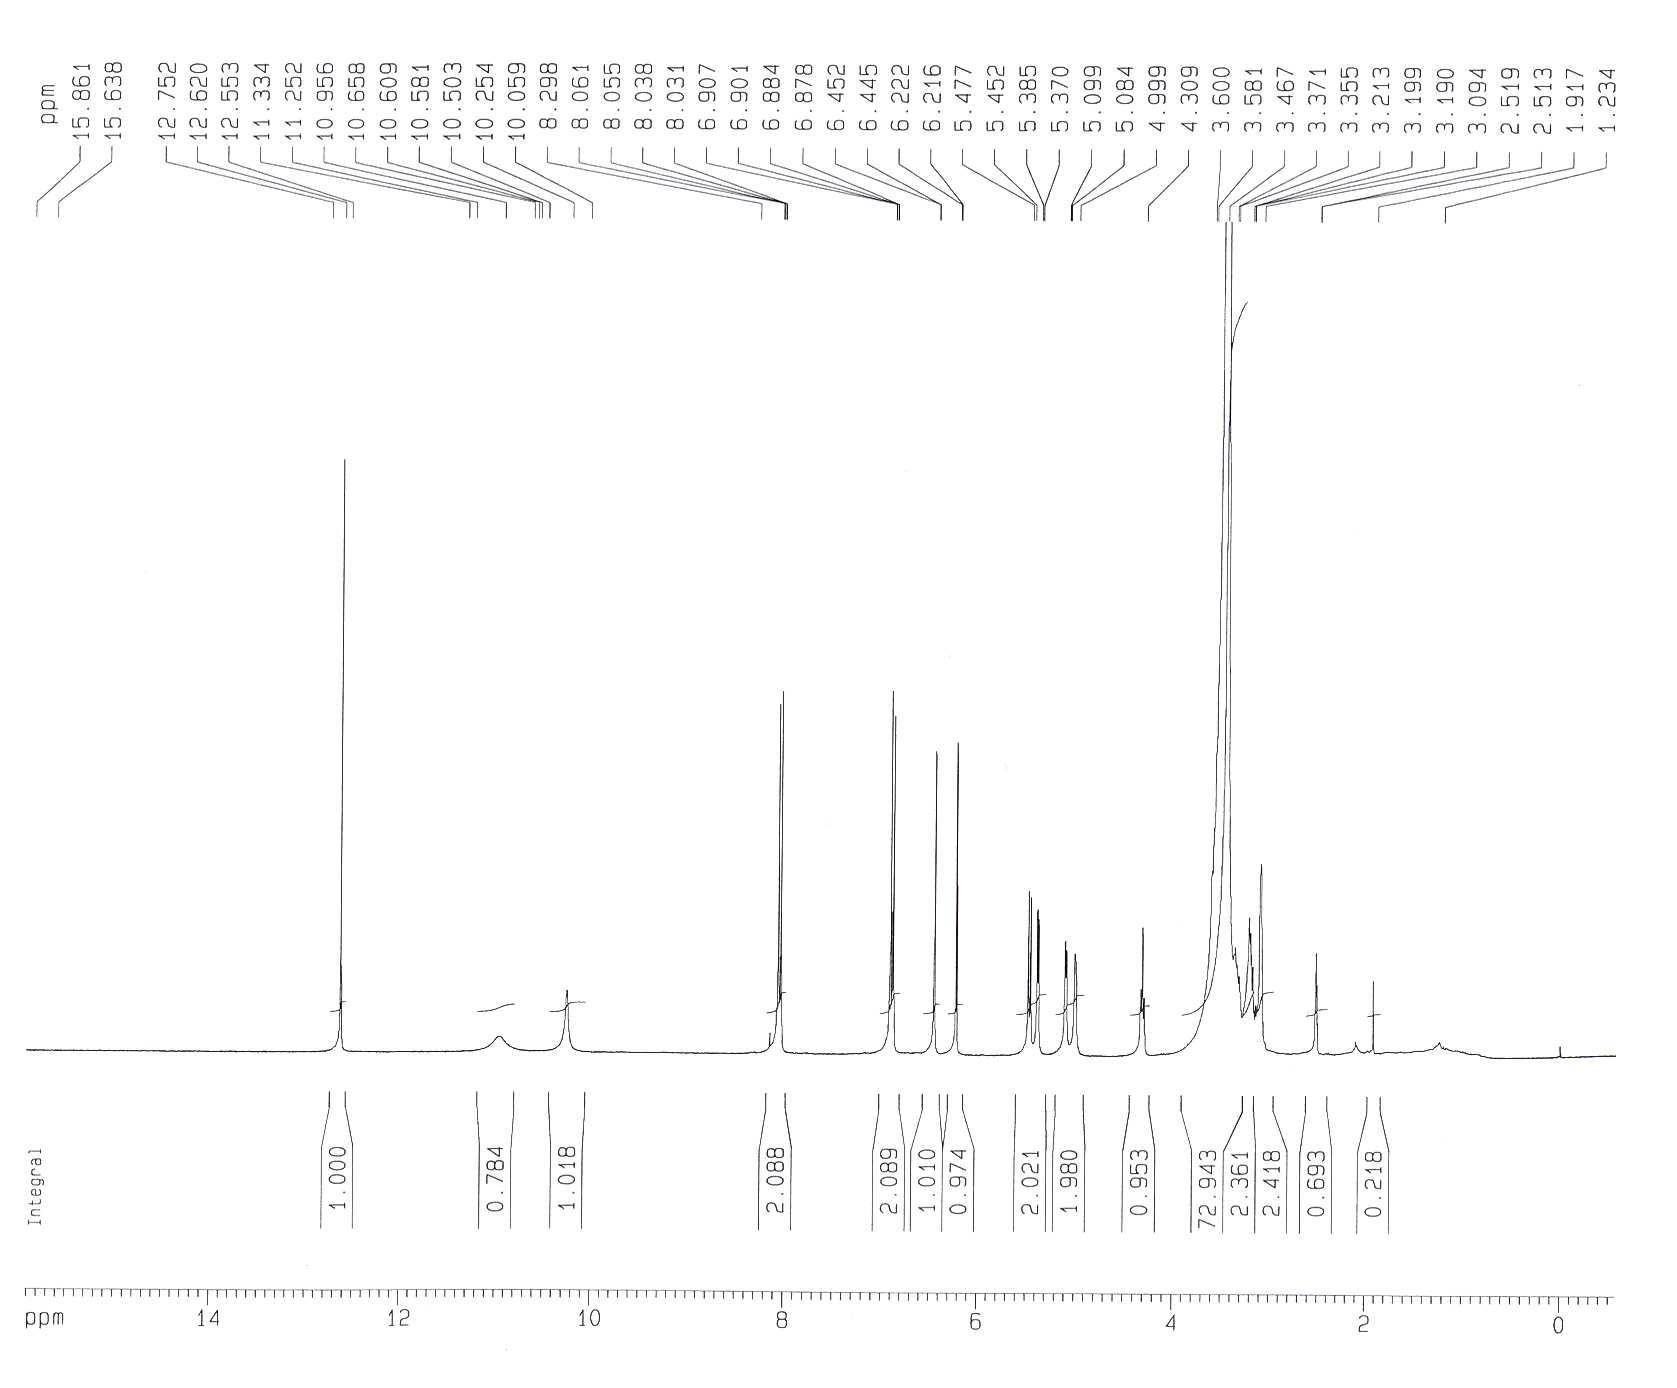 1H-NMR Spectrum of Compound 2(DMSO-d6, 300 MHz)